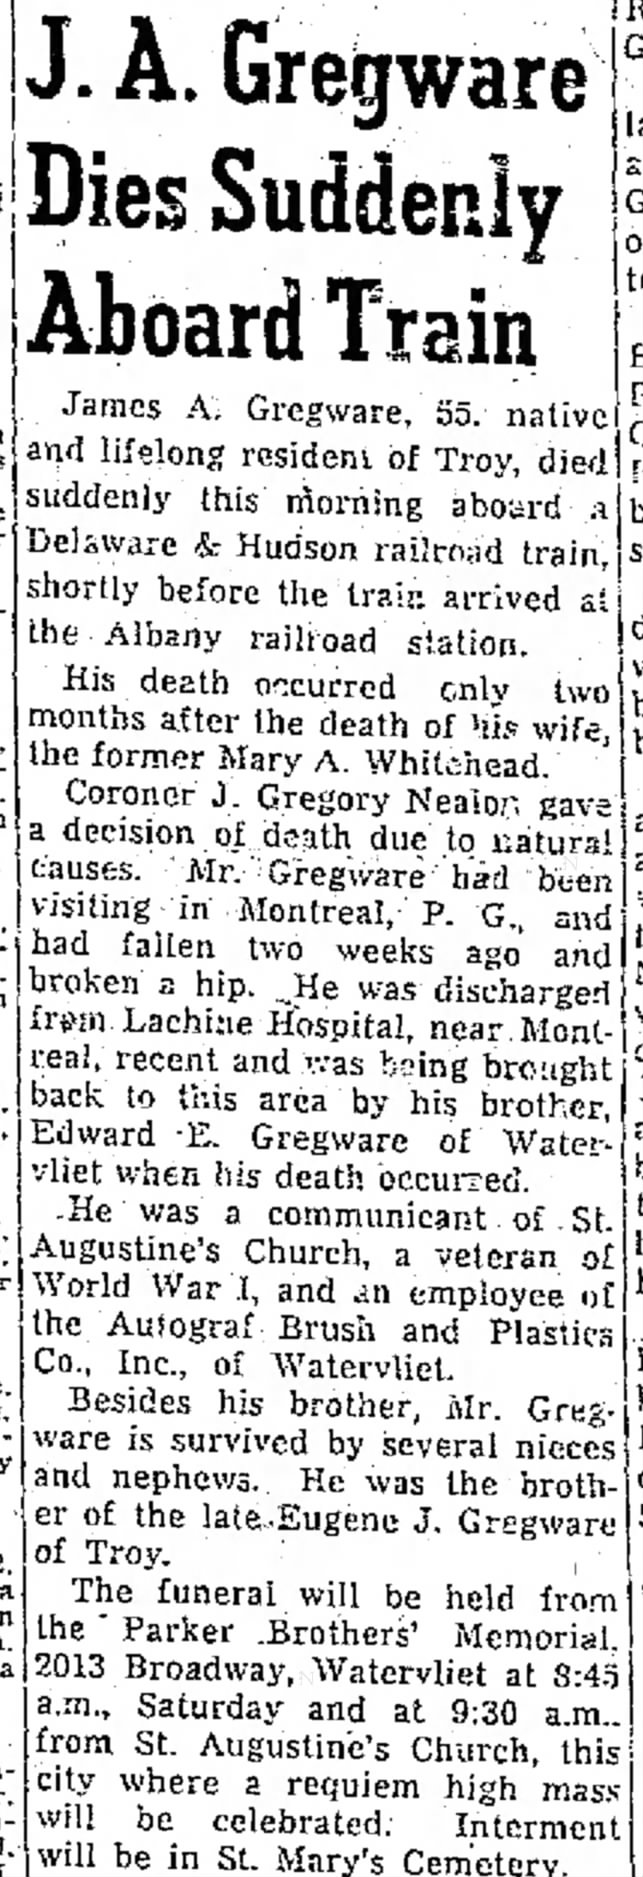 J.A. Gregware Dies Aboard Train  4/30/52 newspaper